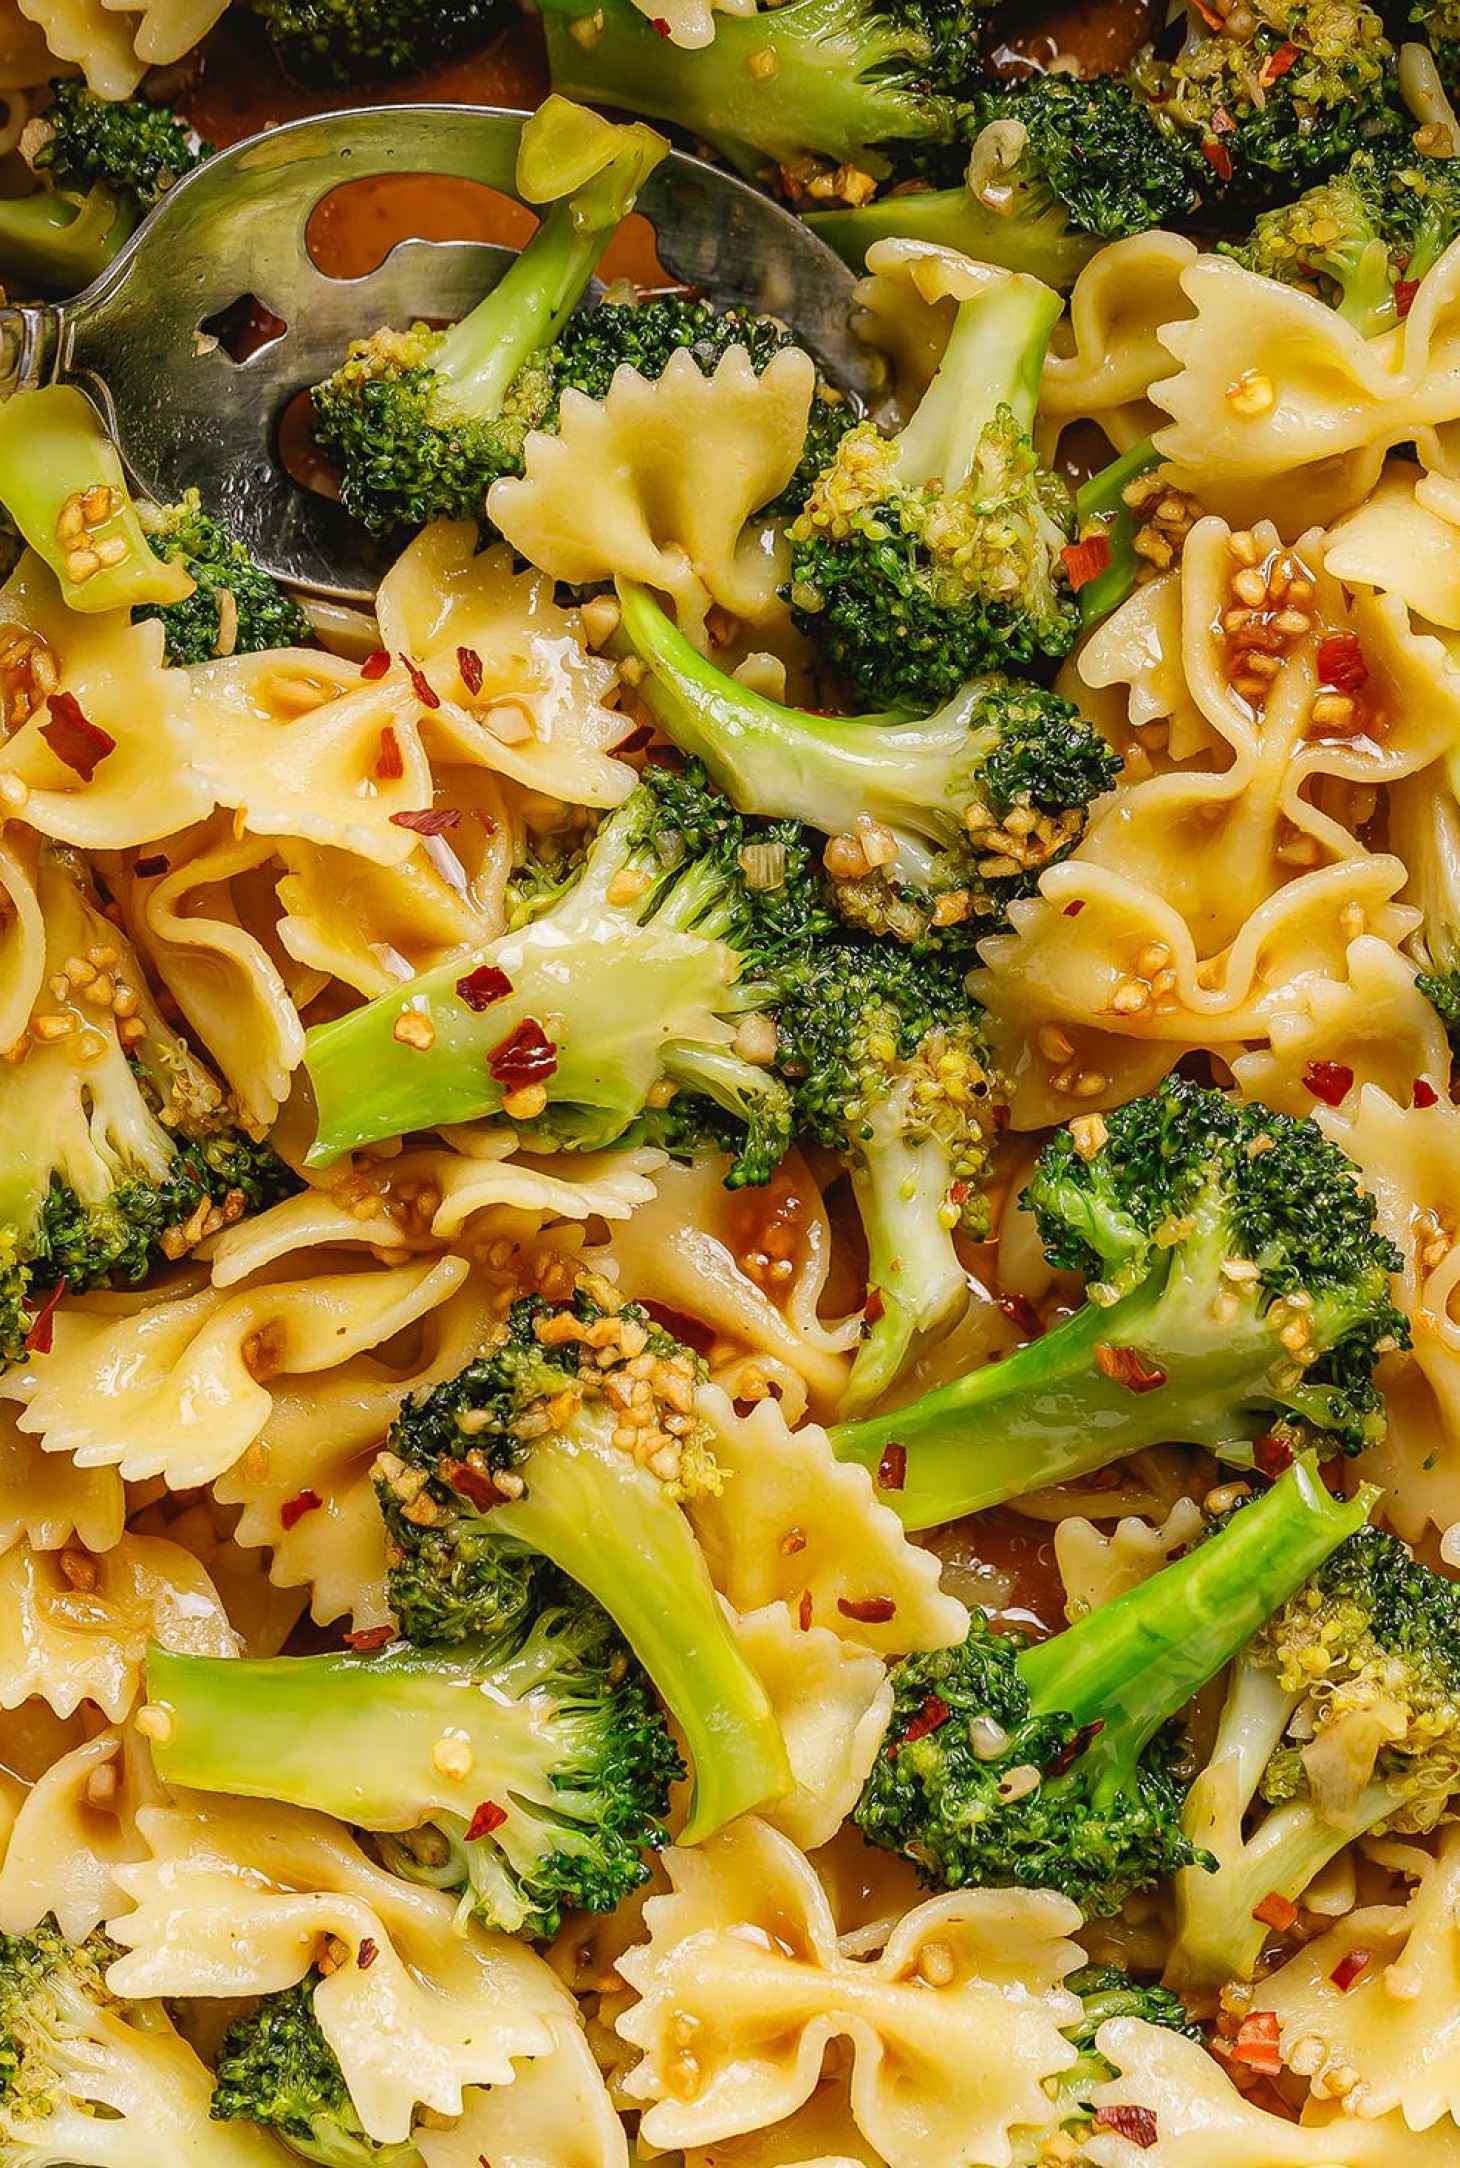 Garlic Broccoli Stir-Fry with Pasta - #recipe by #eatwell101 - https://www.eatwell101.com/pasta-broccoli-stir-fry-recipe